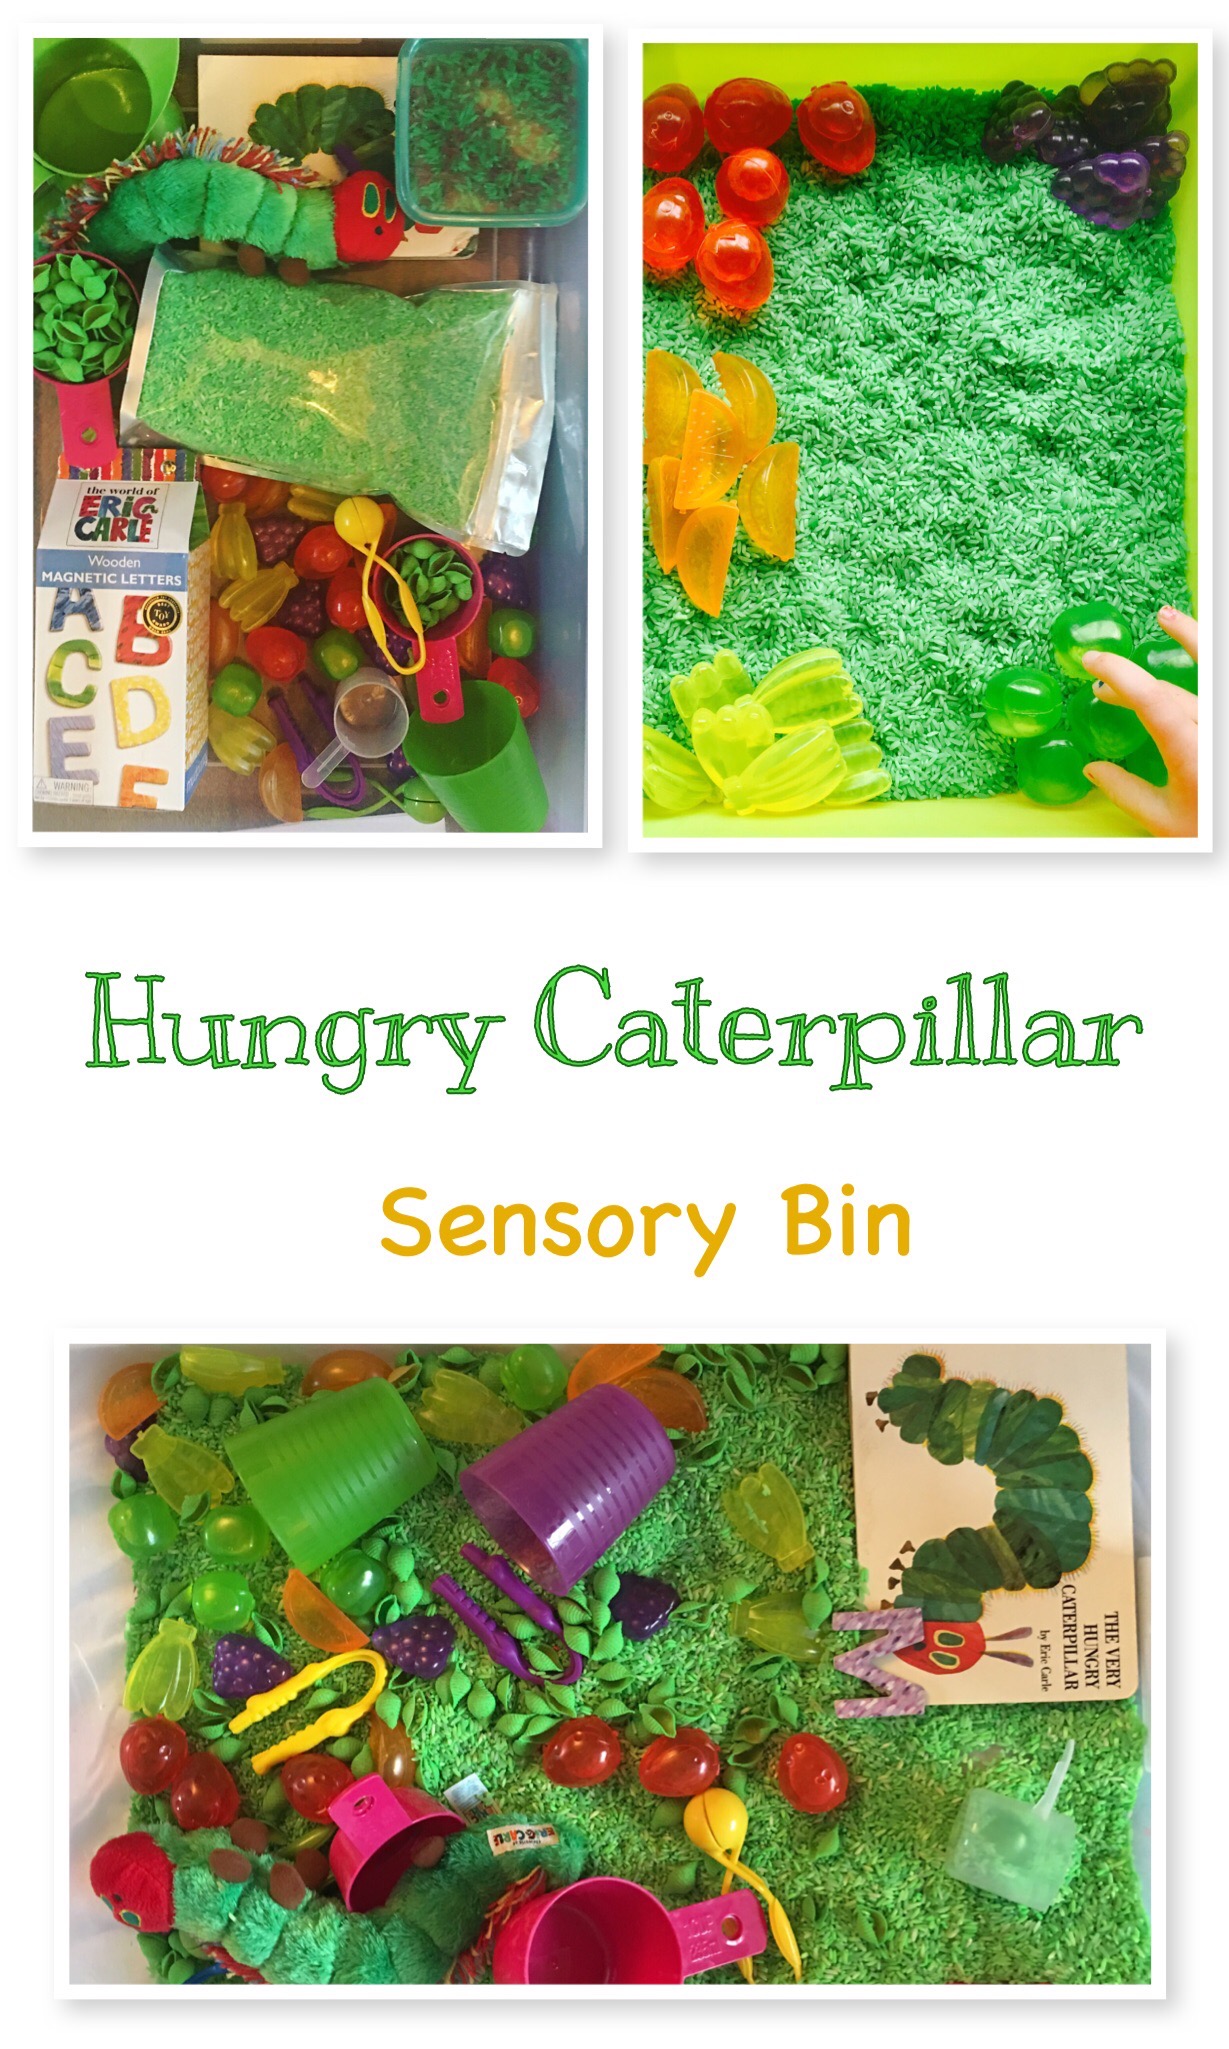 The very hungry caterpillar inspired sensory bin.